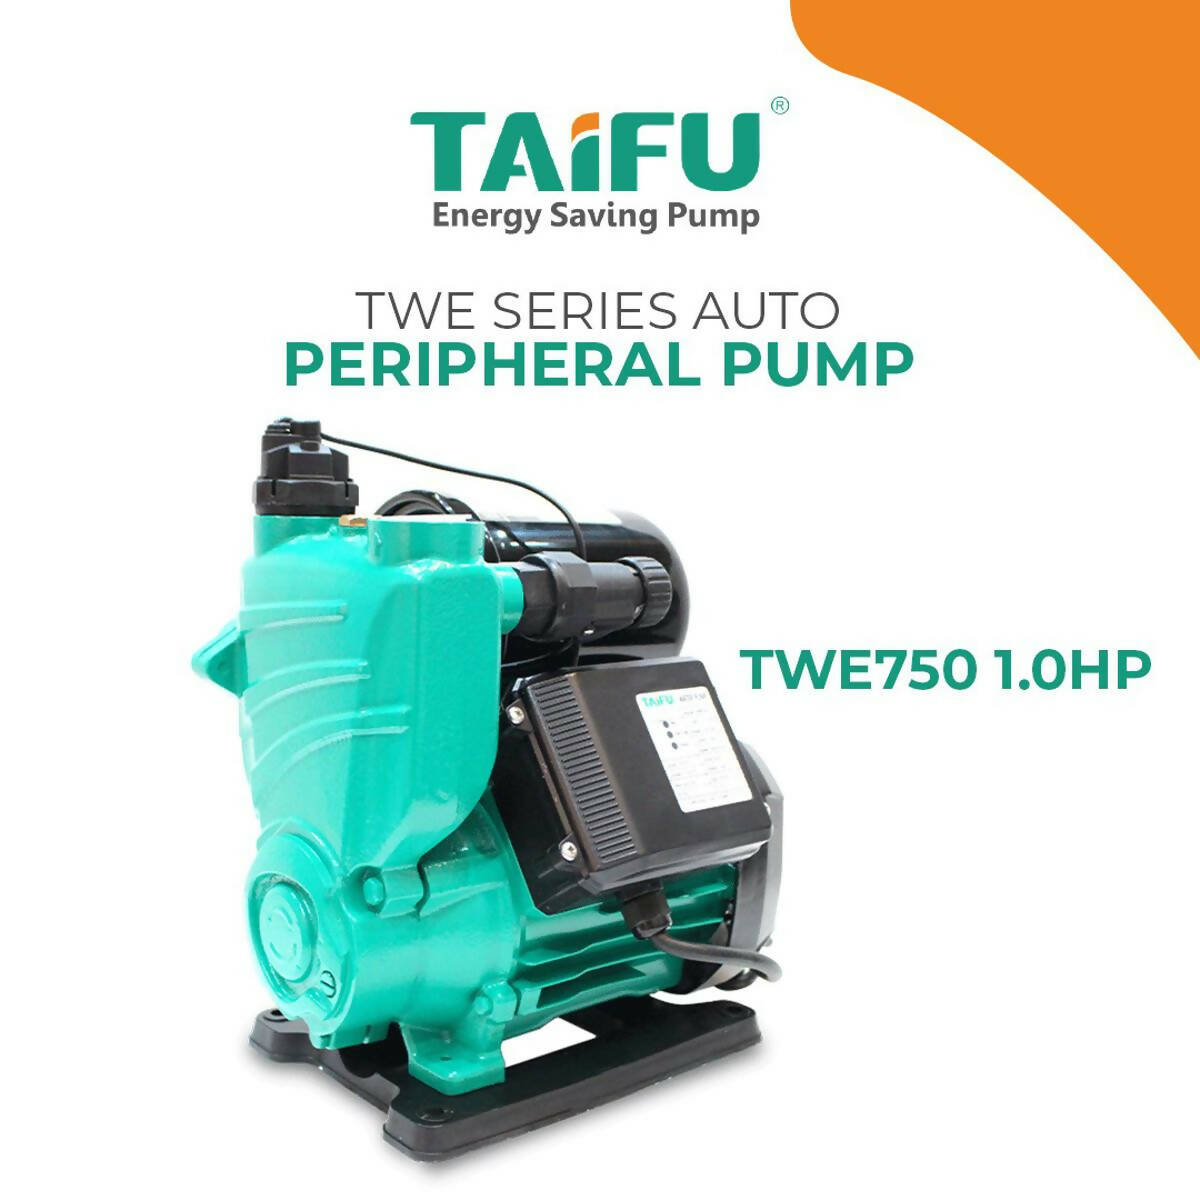 Taifu Twe Series Auto Peripheral Pump - Twe750 - 1.0hp - 100% Copper